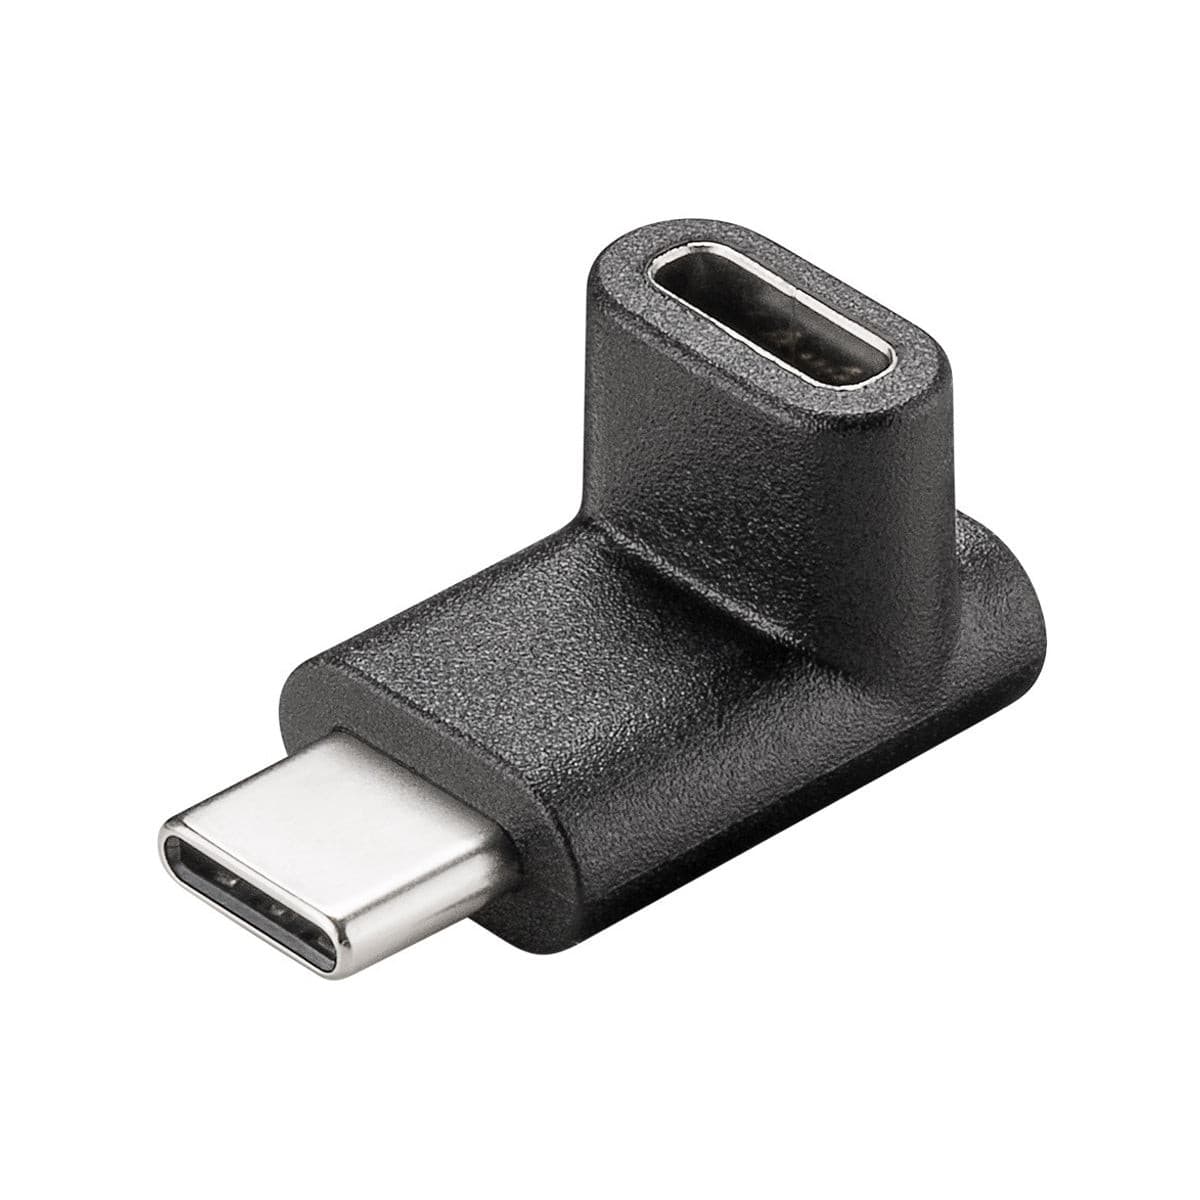 Goobay USB-C to USB-C Adapter 90 degree plug for USB-C cables - Black.